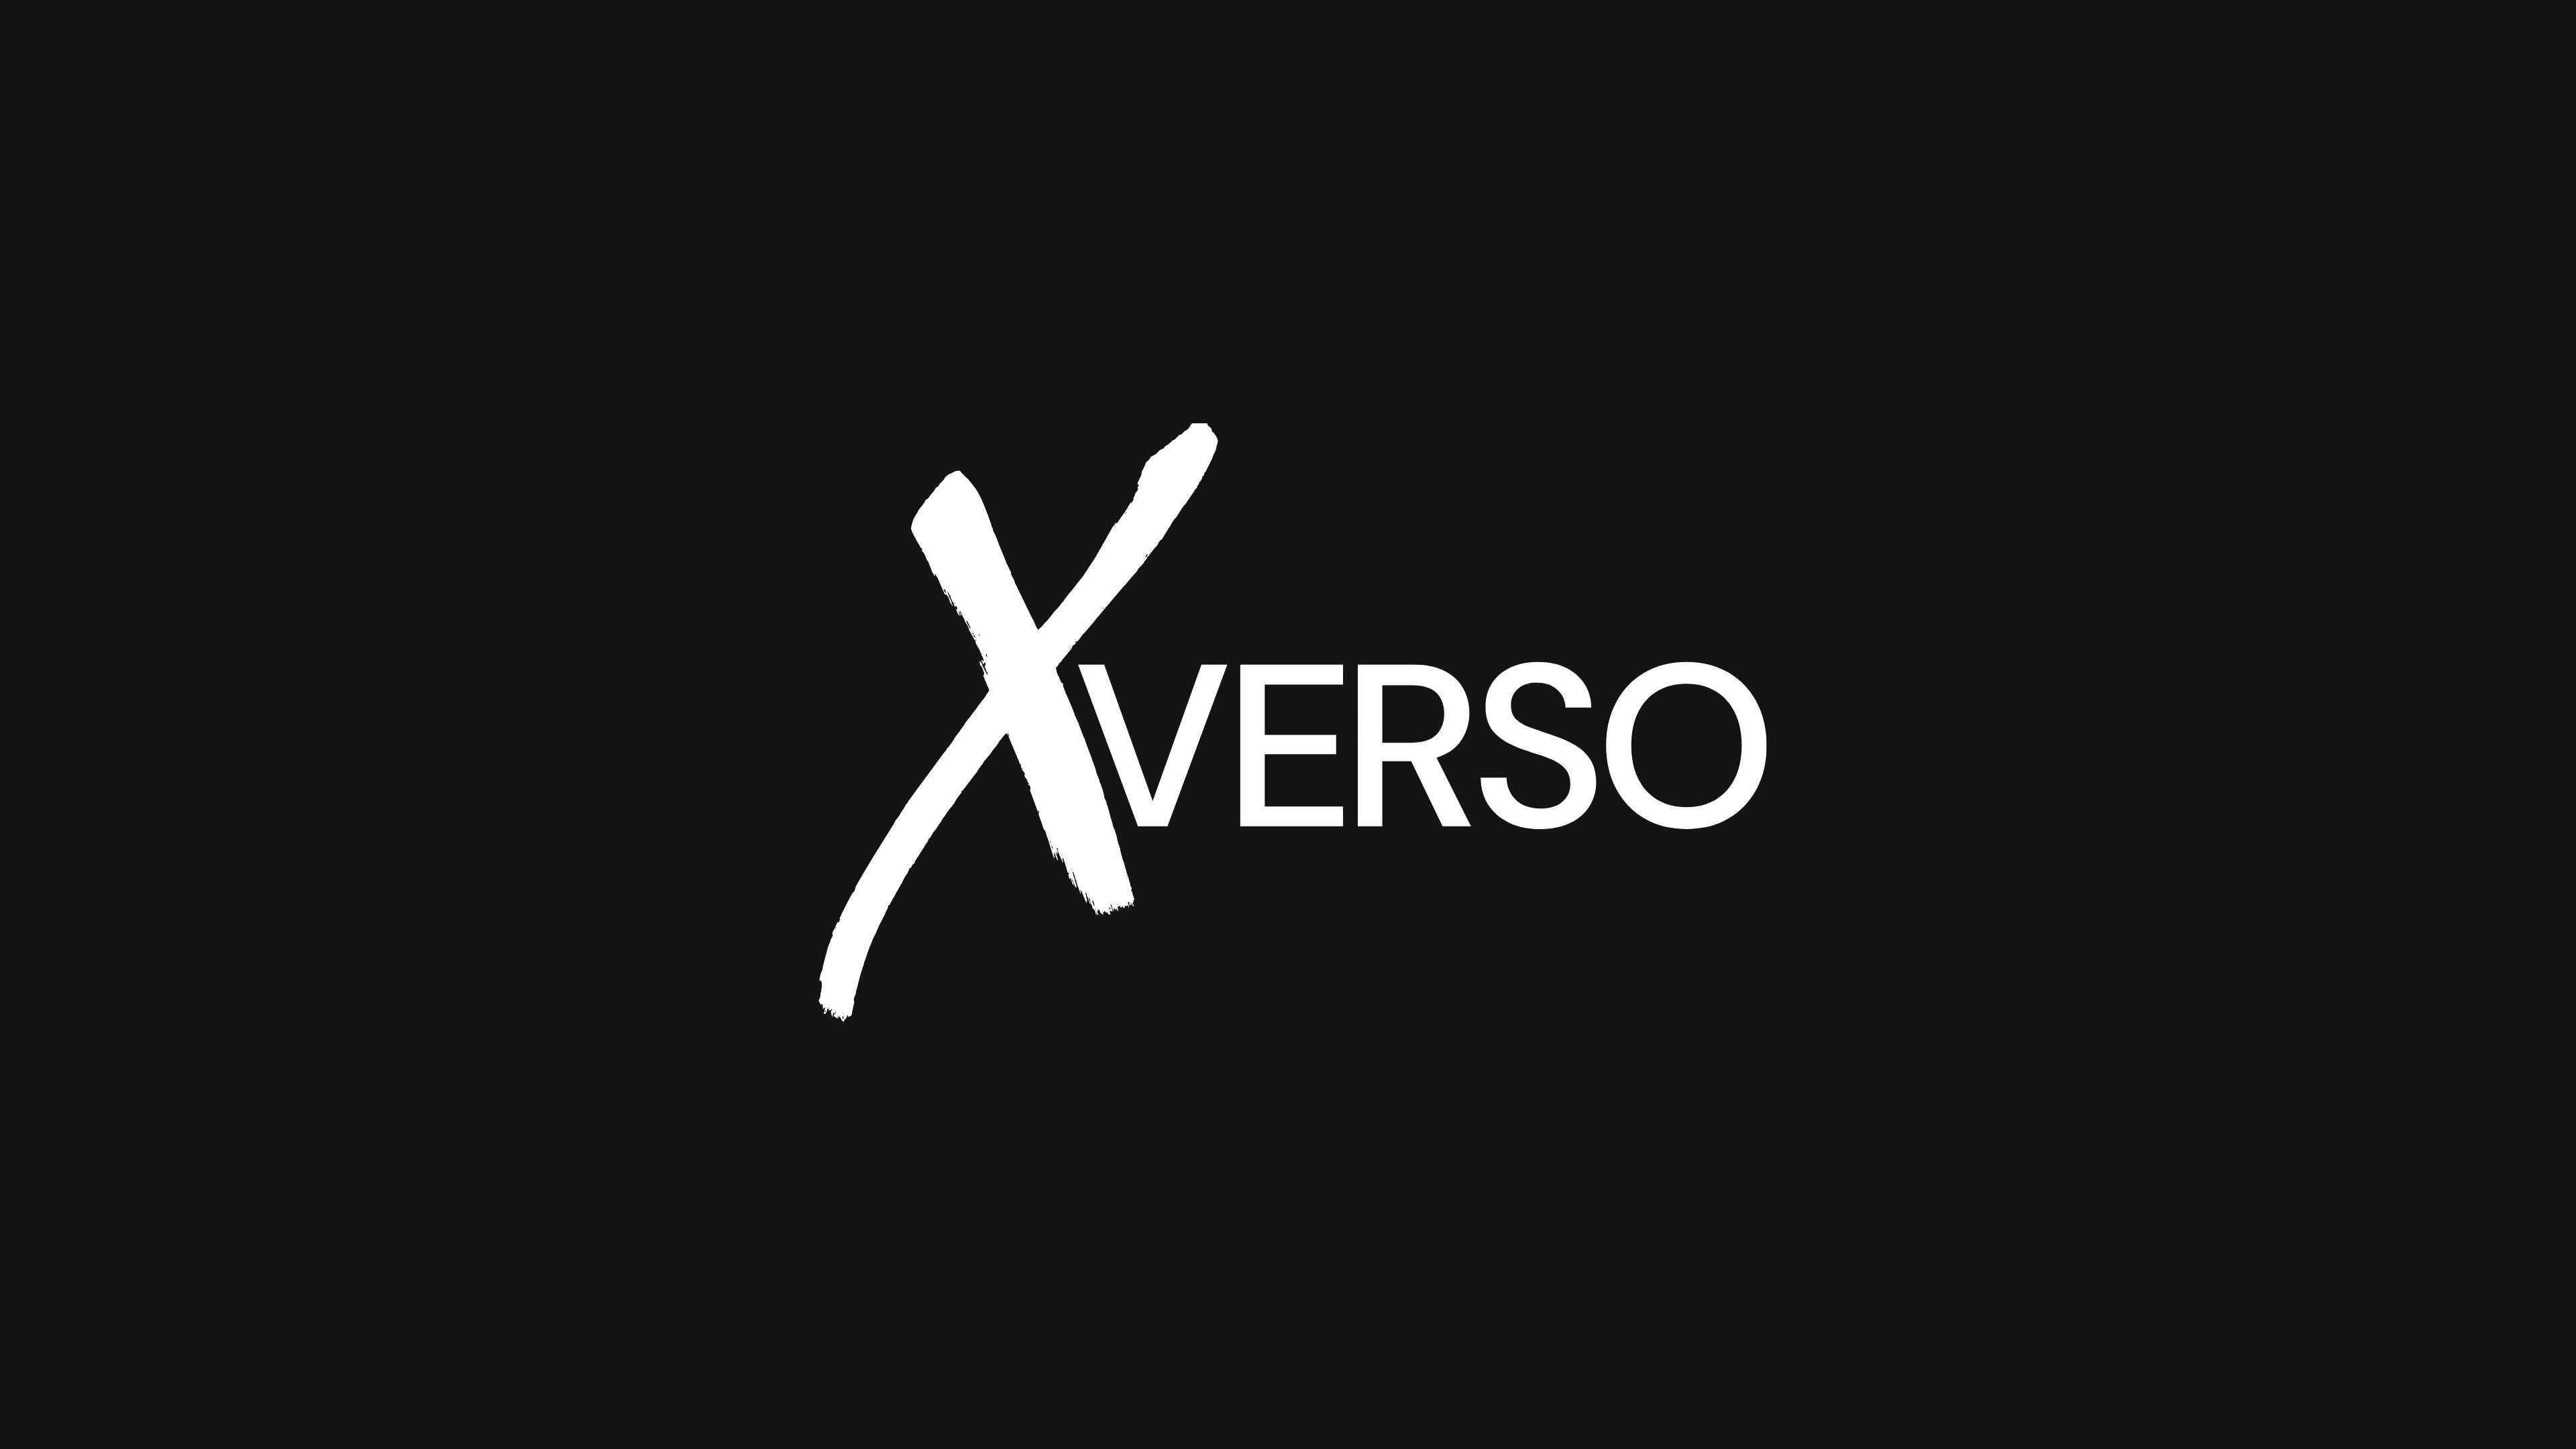 Xverso Ventures